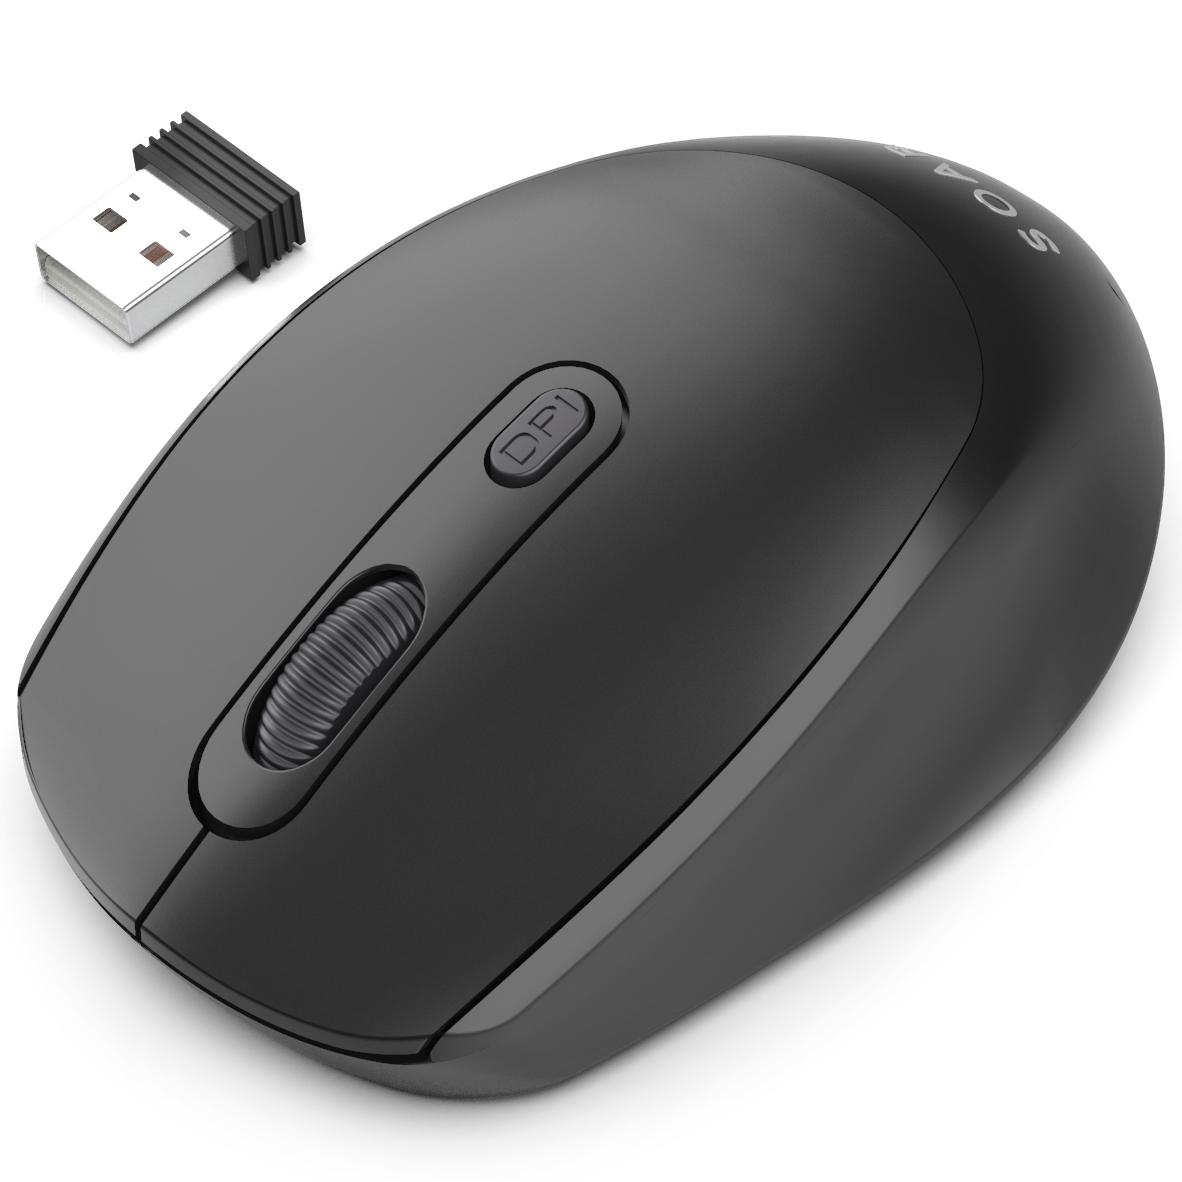 Soar Wireless Mouse - Black - Shop Keyboards & Mice at H-E-B